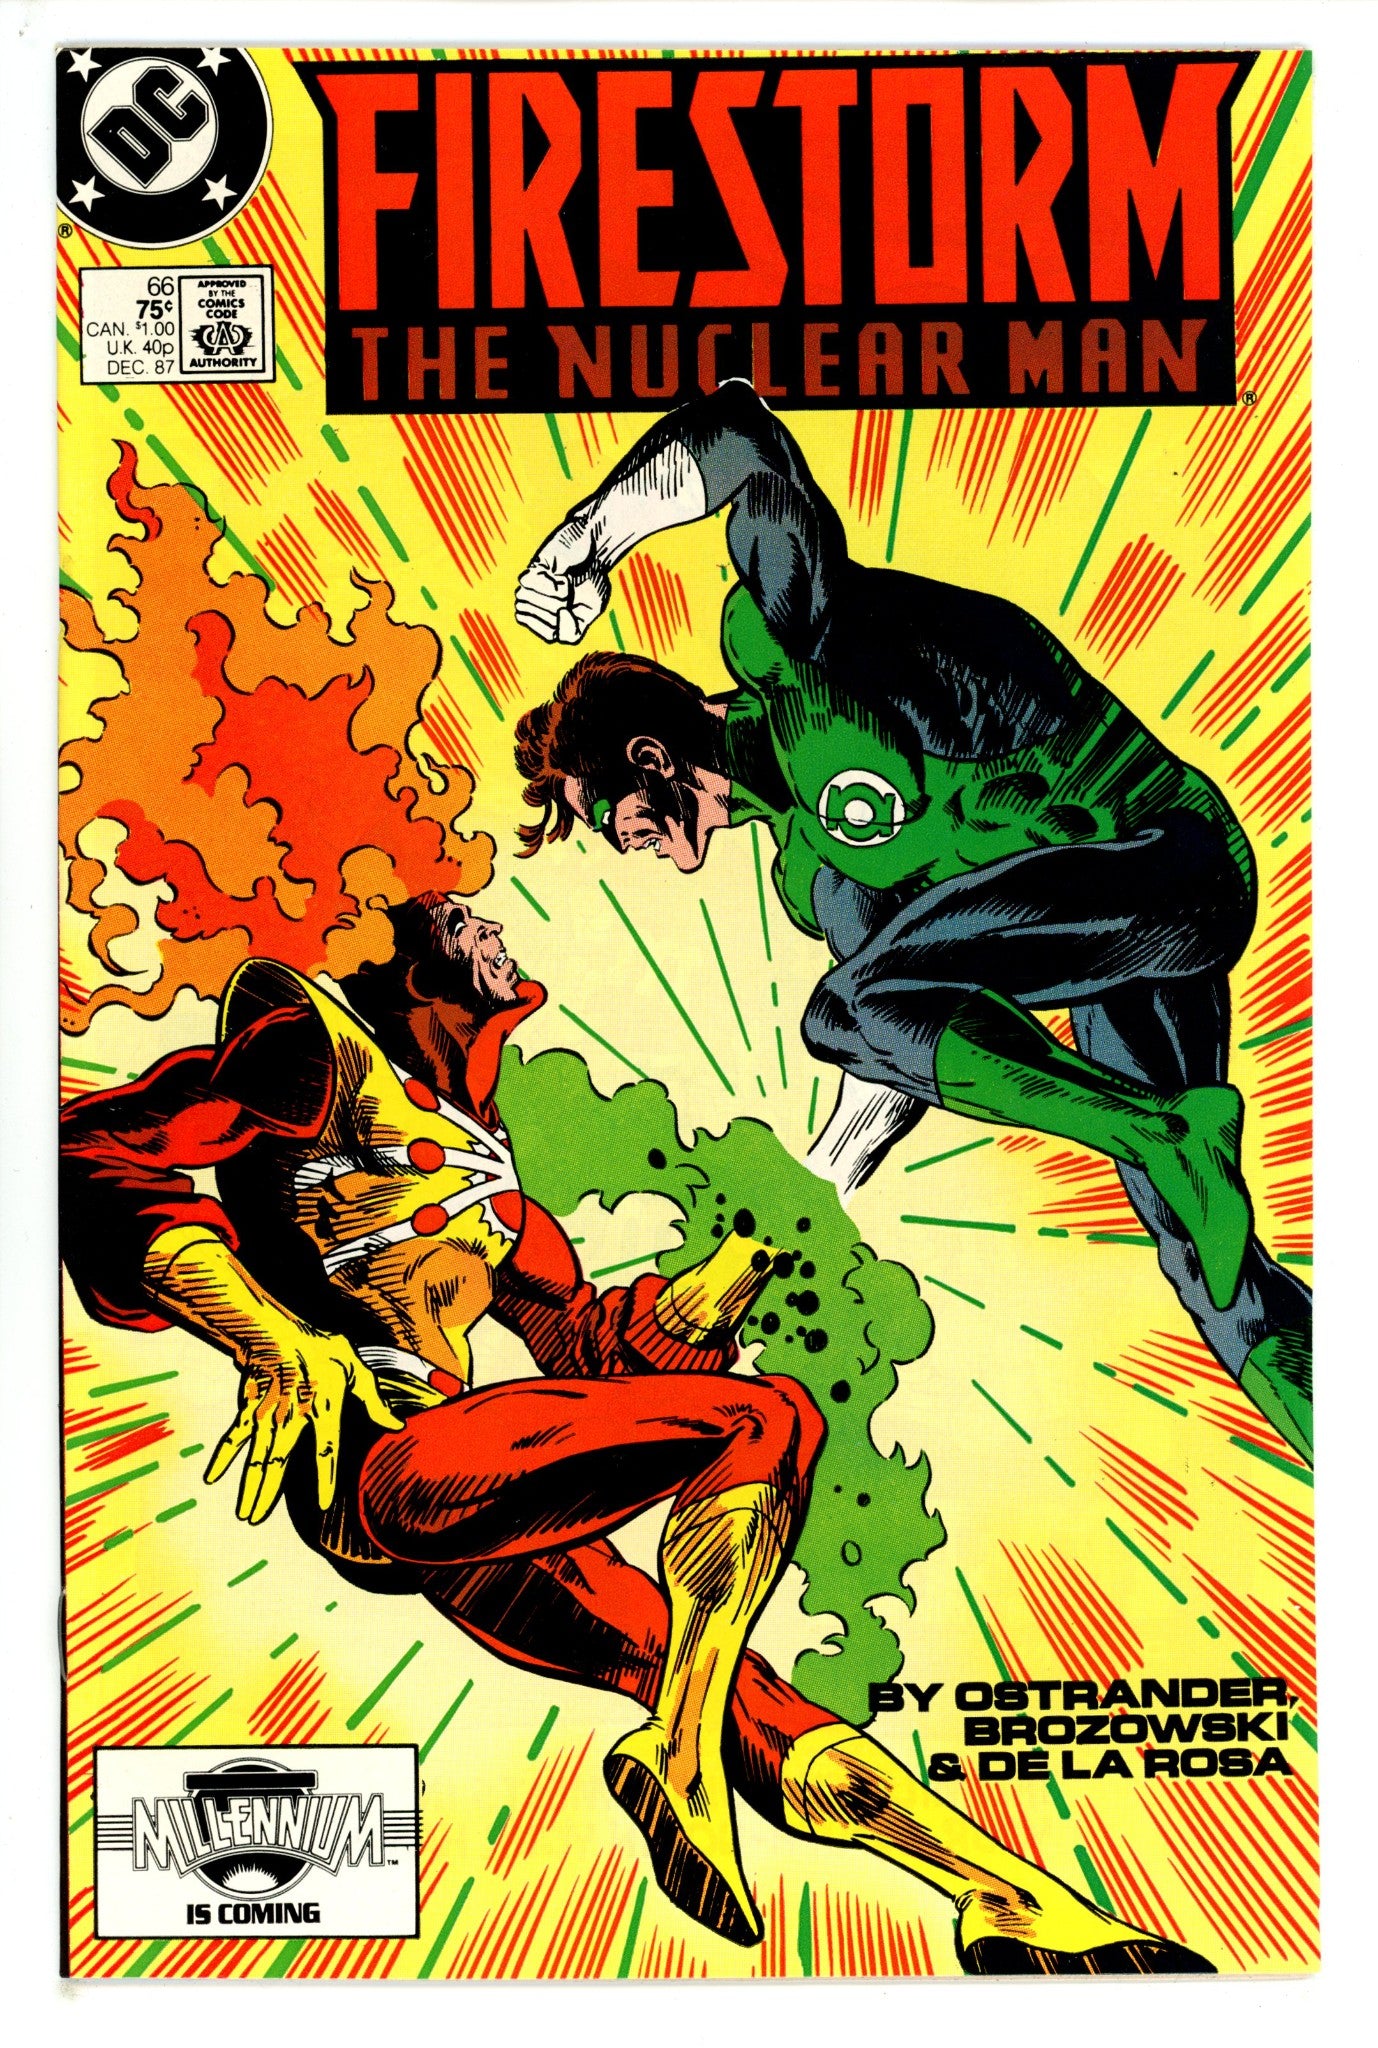 Firestorm the Nuclear Man Vol 2 66 (1987)